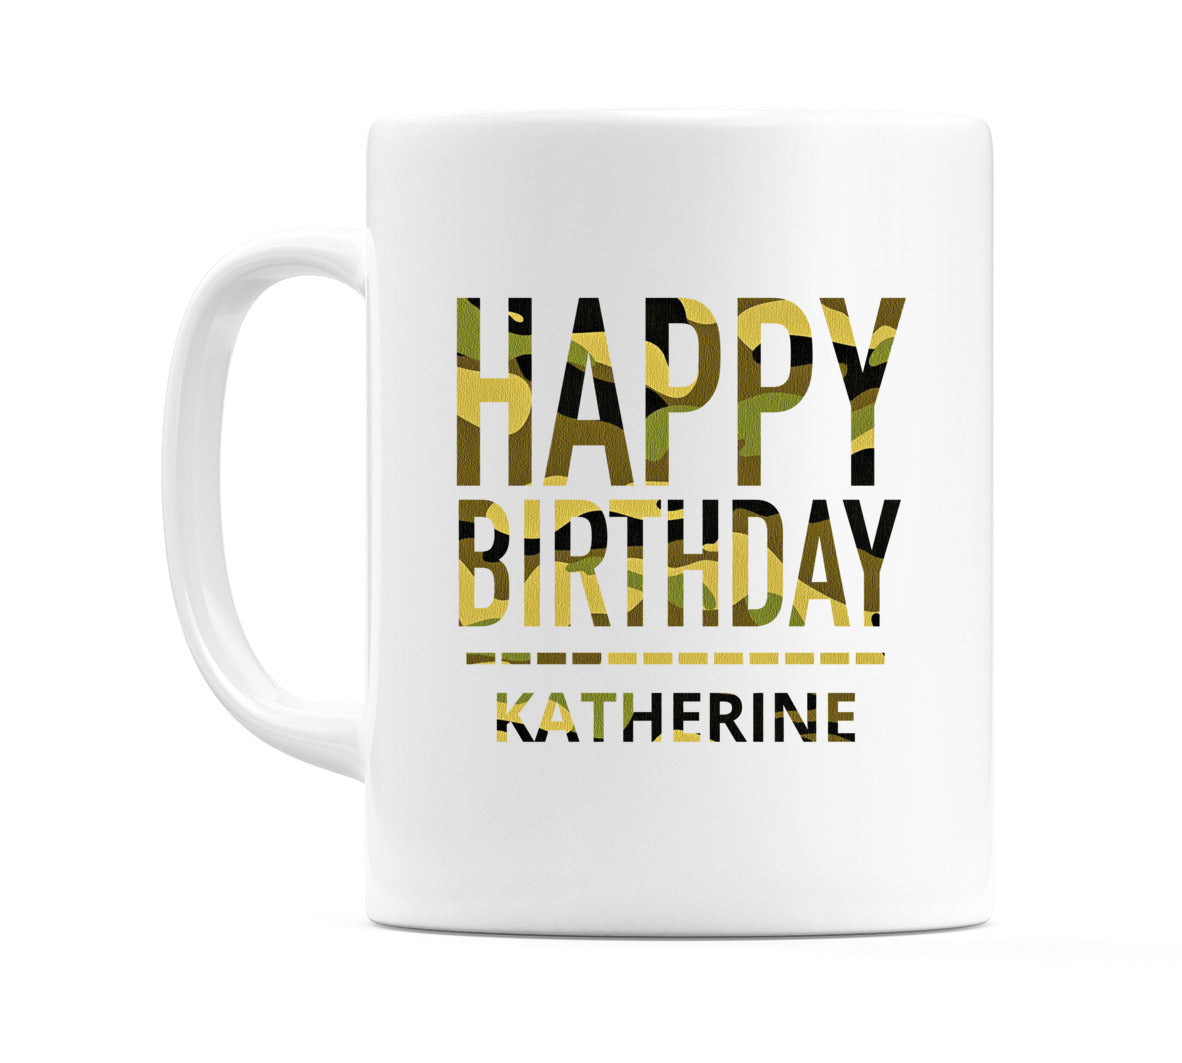 Happy Birthday Katherine (Camo) Mug Cup by WeDoMugs